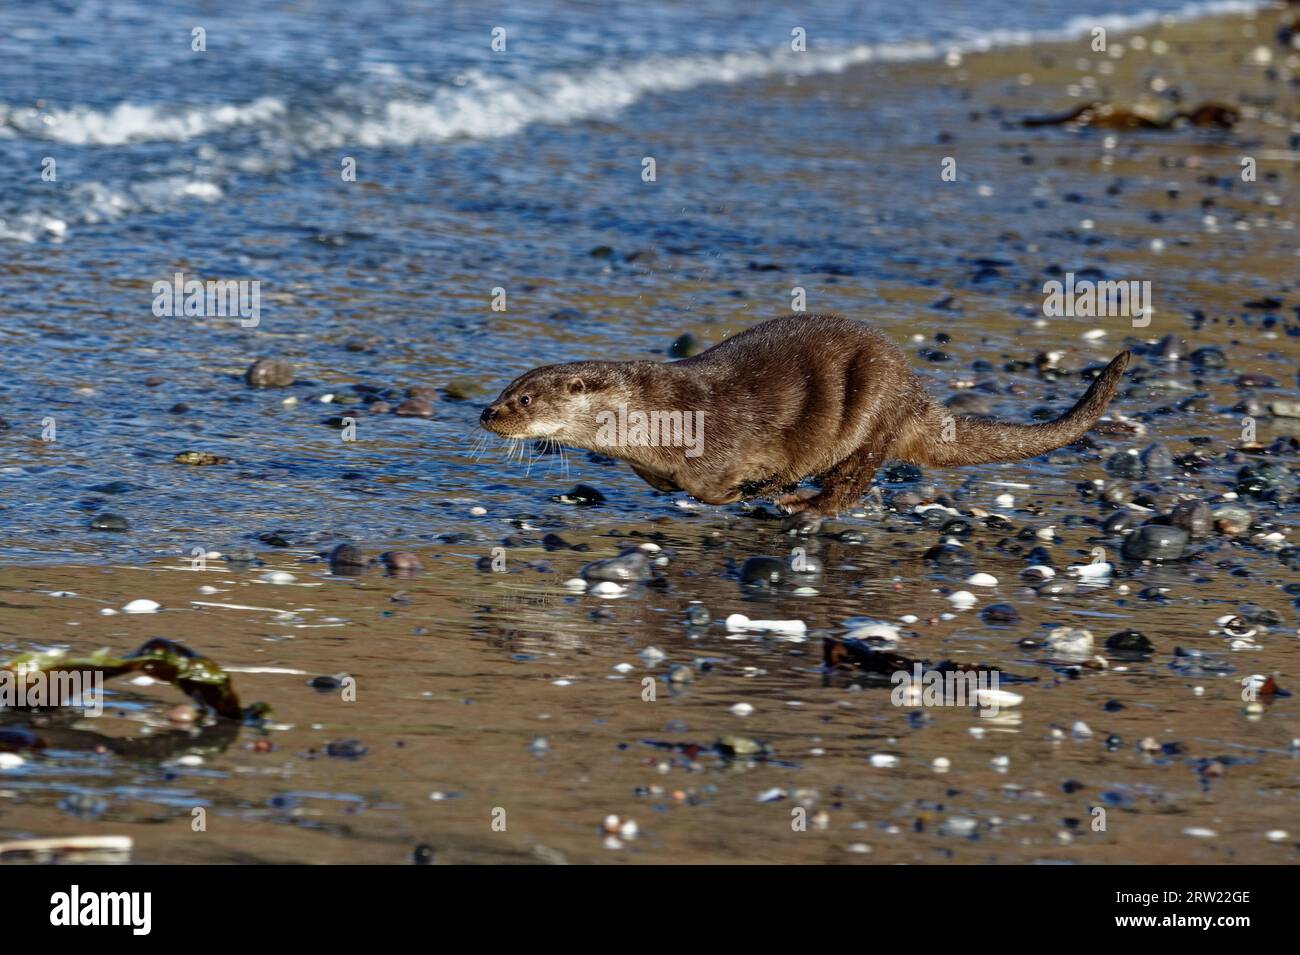 Eurasian Otter (Lutra lutra) Immature running through water at edge of beach. Stock Photo